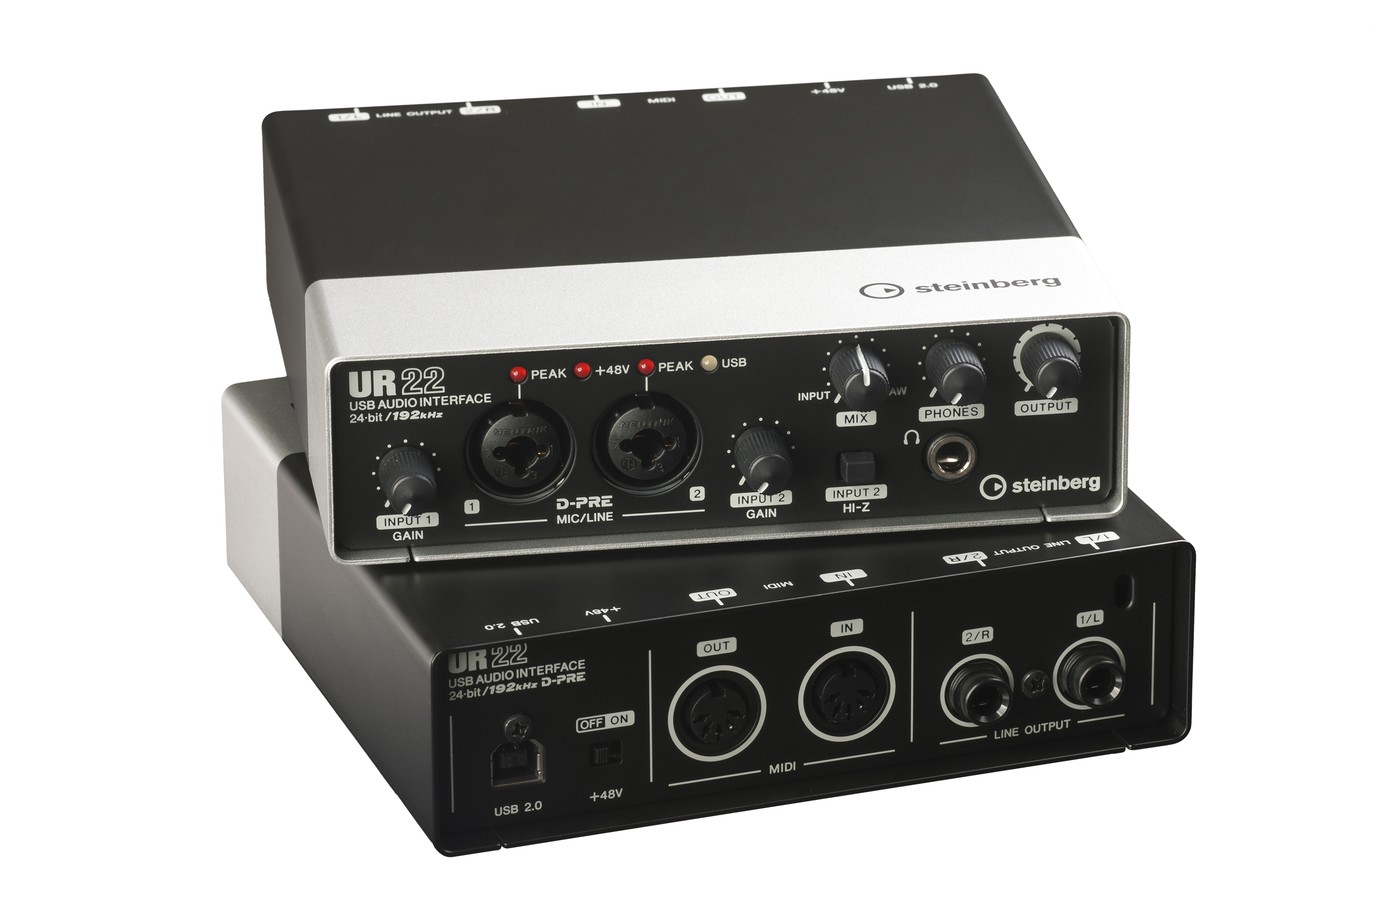 Steinberg UR22 portable audio interface announced